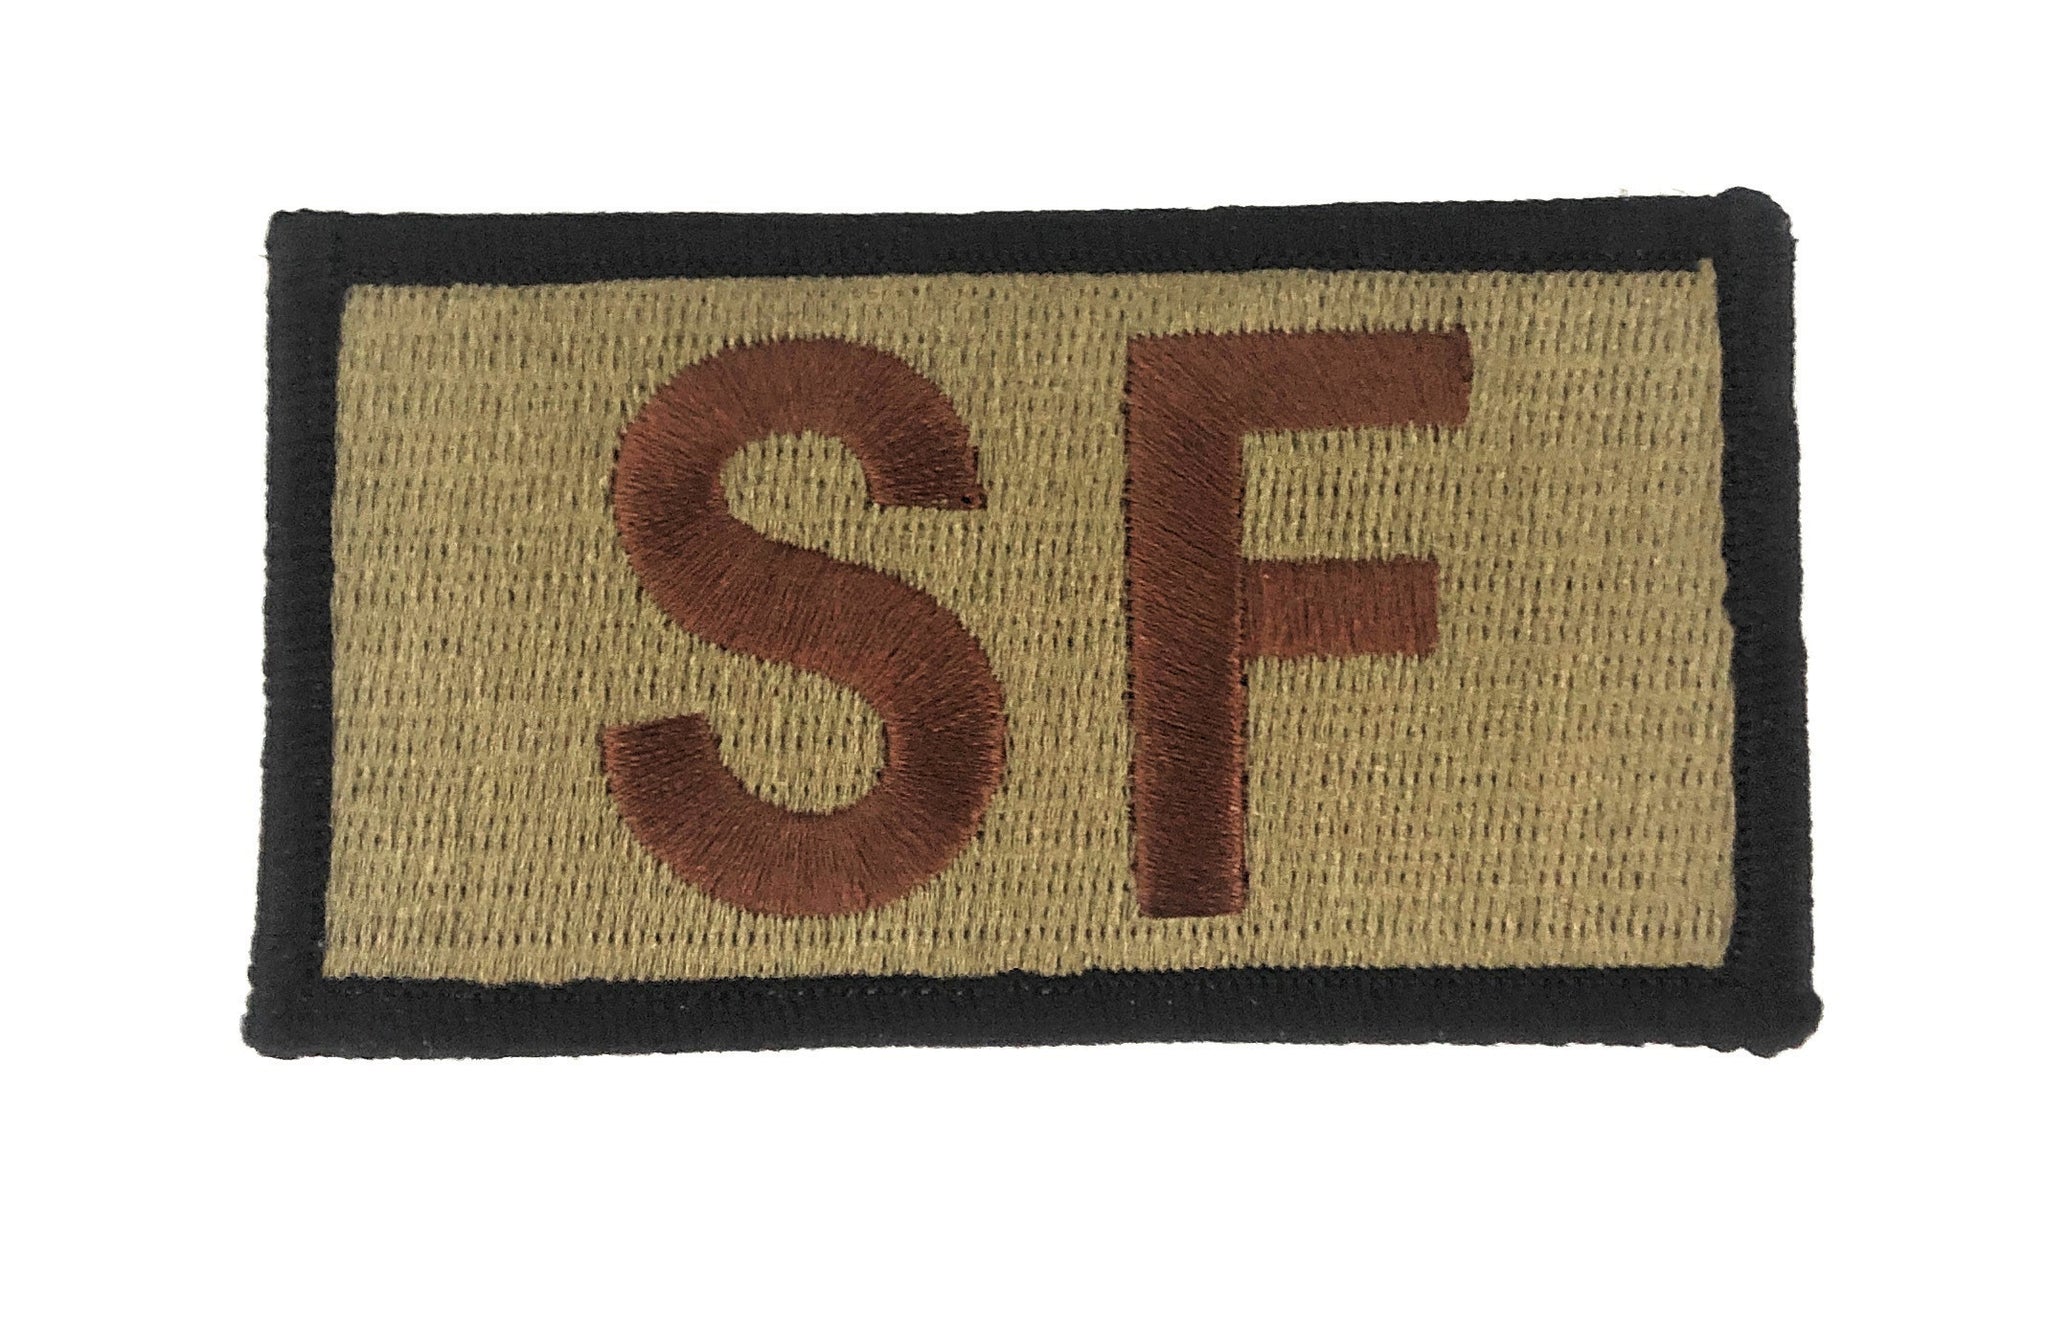 U.S. Air Force S.F. Brassard (Spice Brown with Black Border) OCP Patch W/ Hook Fastener - Insignia Depot